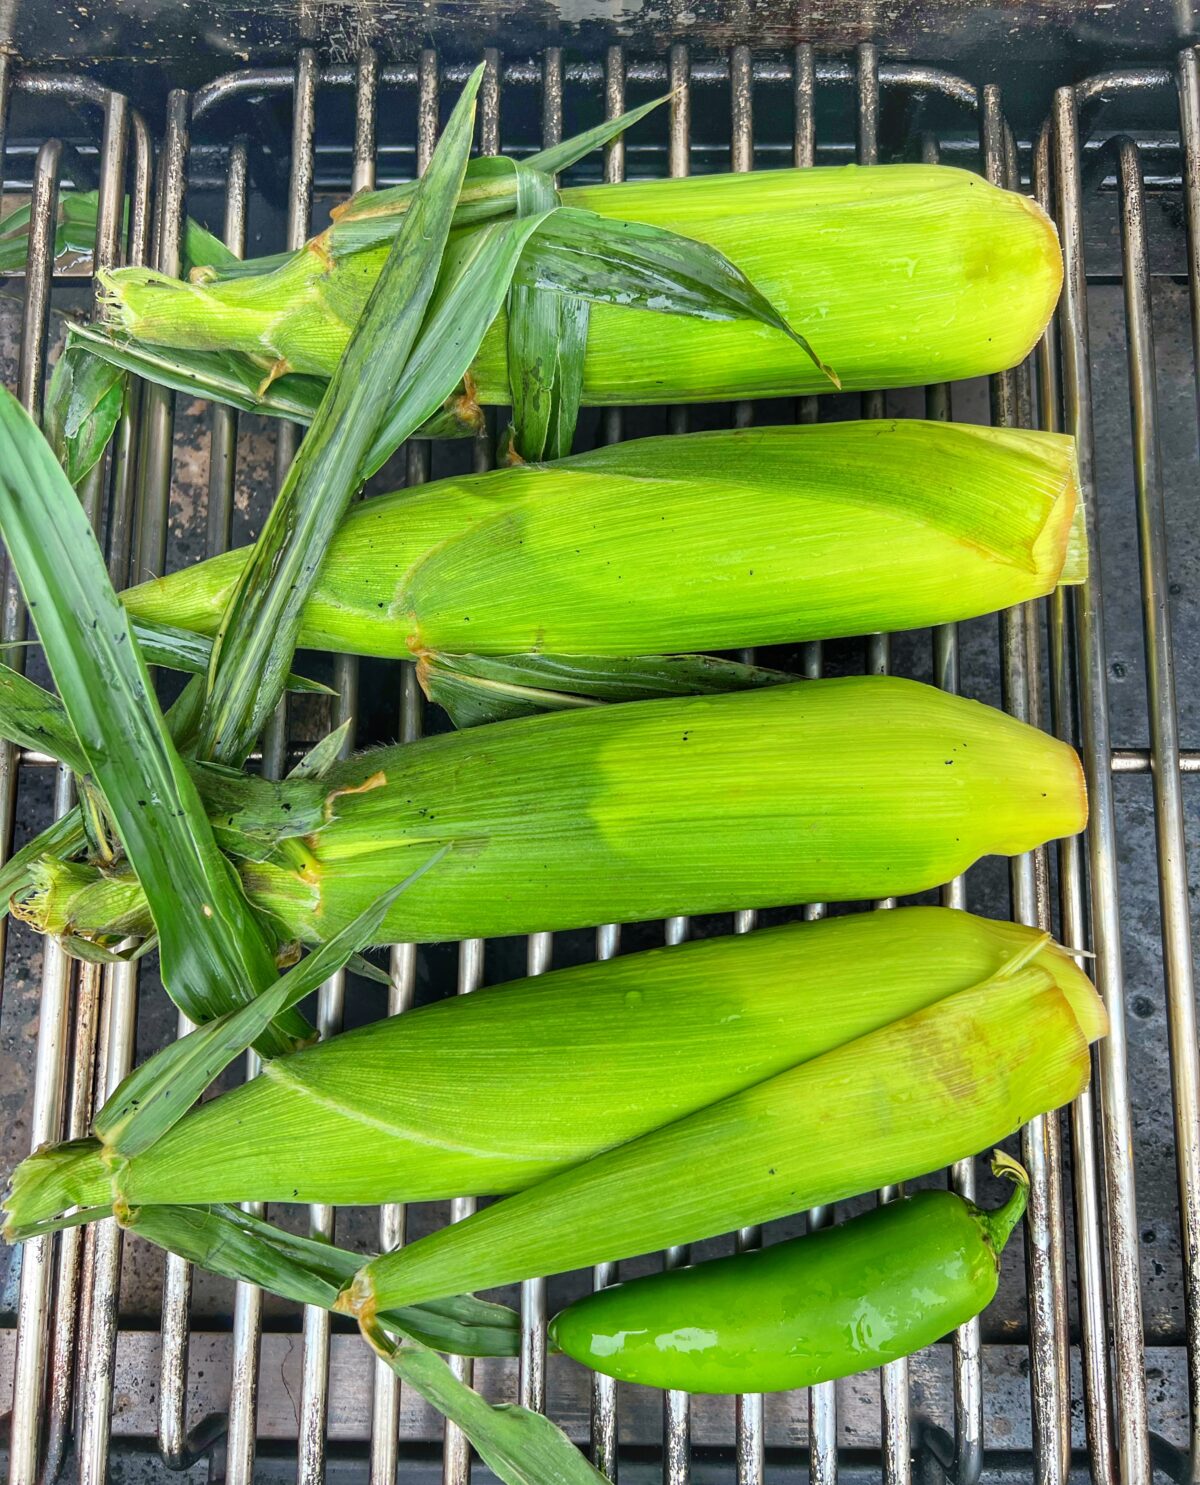 Olathe sweet corn on the grill